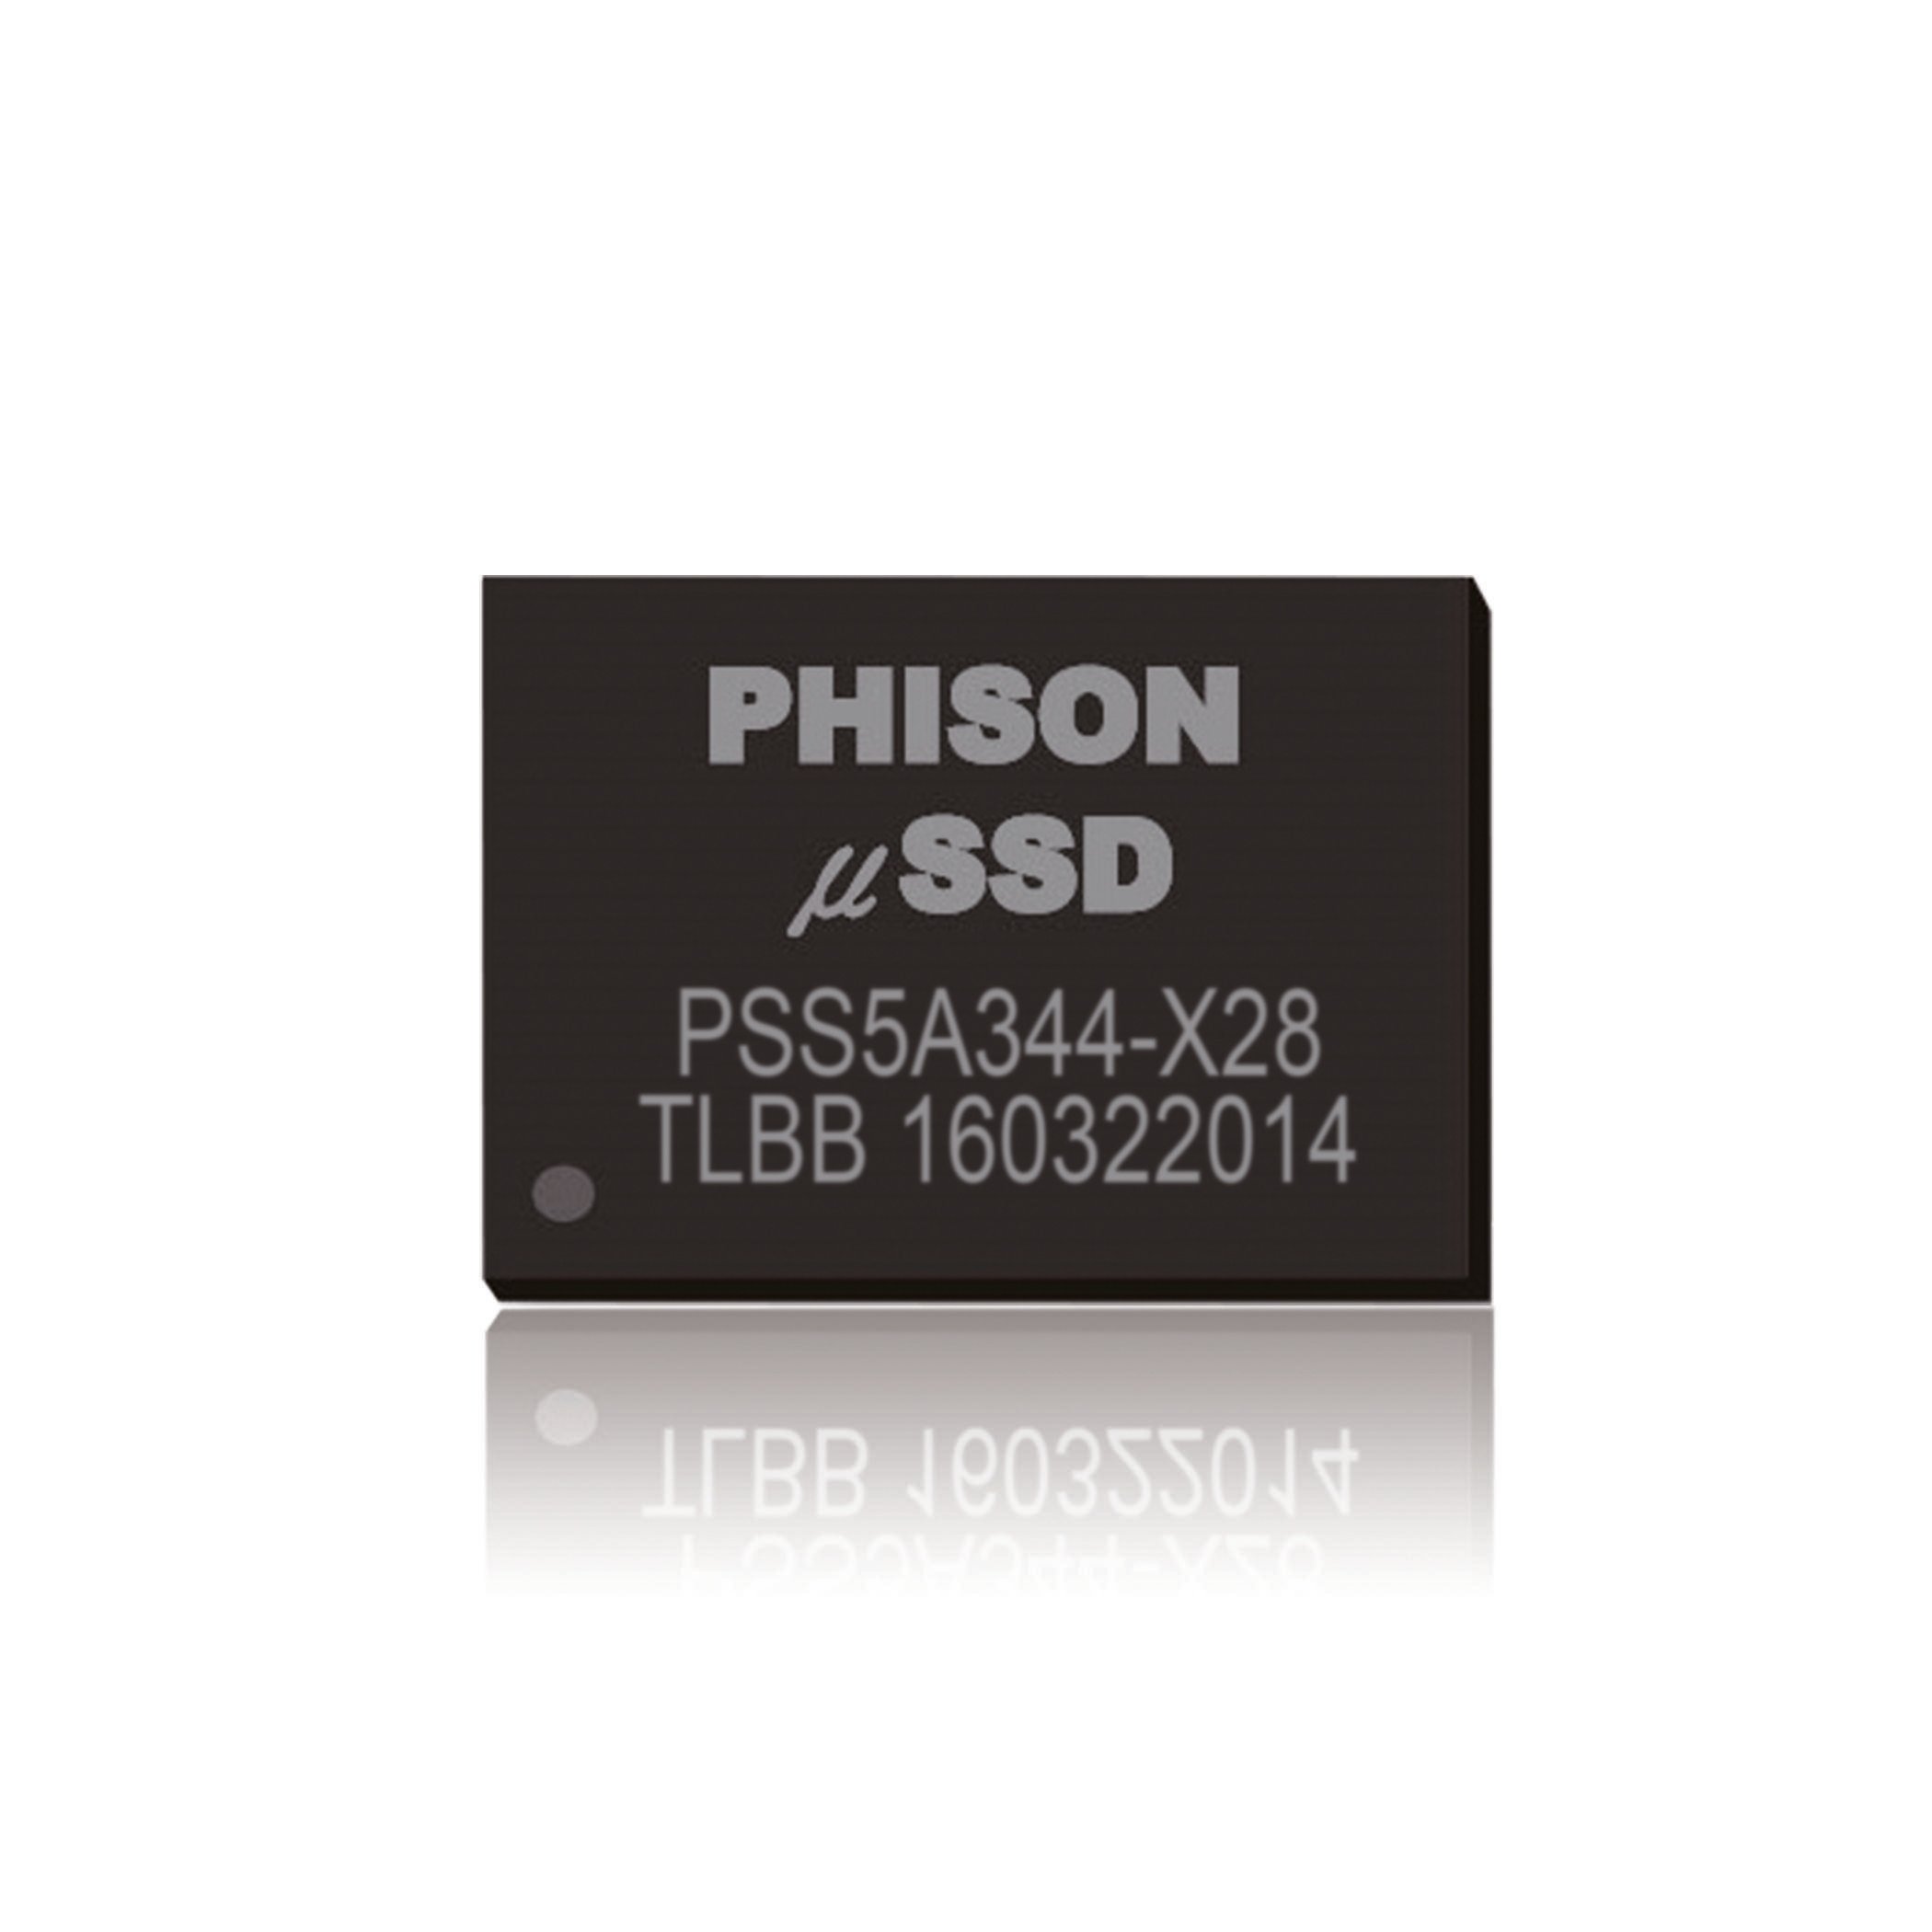 Phison Logo - PCIe SSD, Phison SSD, mSATA mini SSD